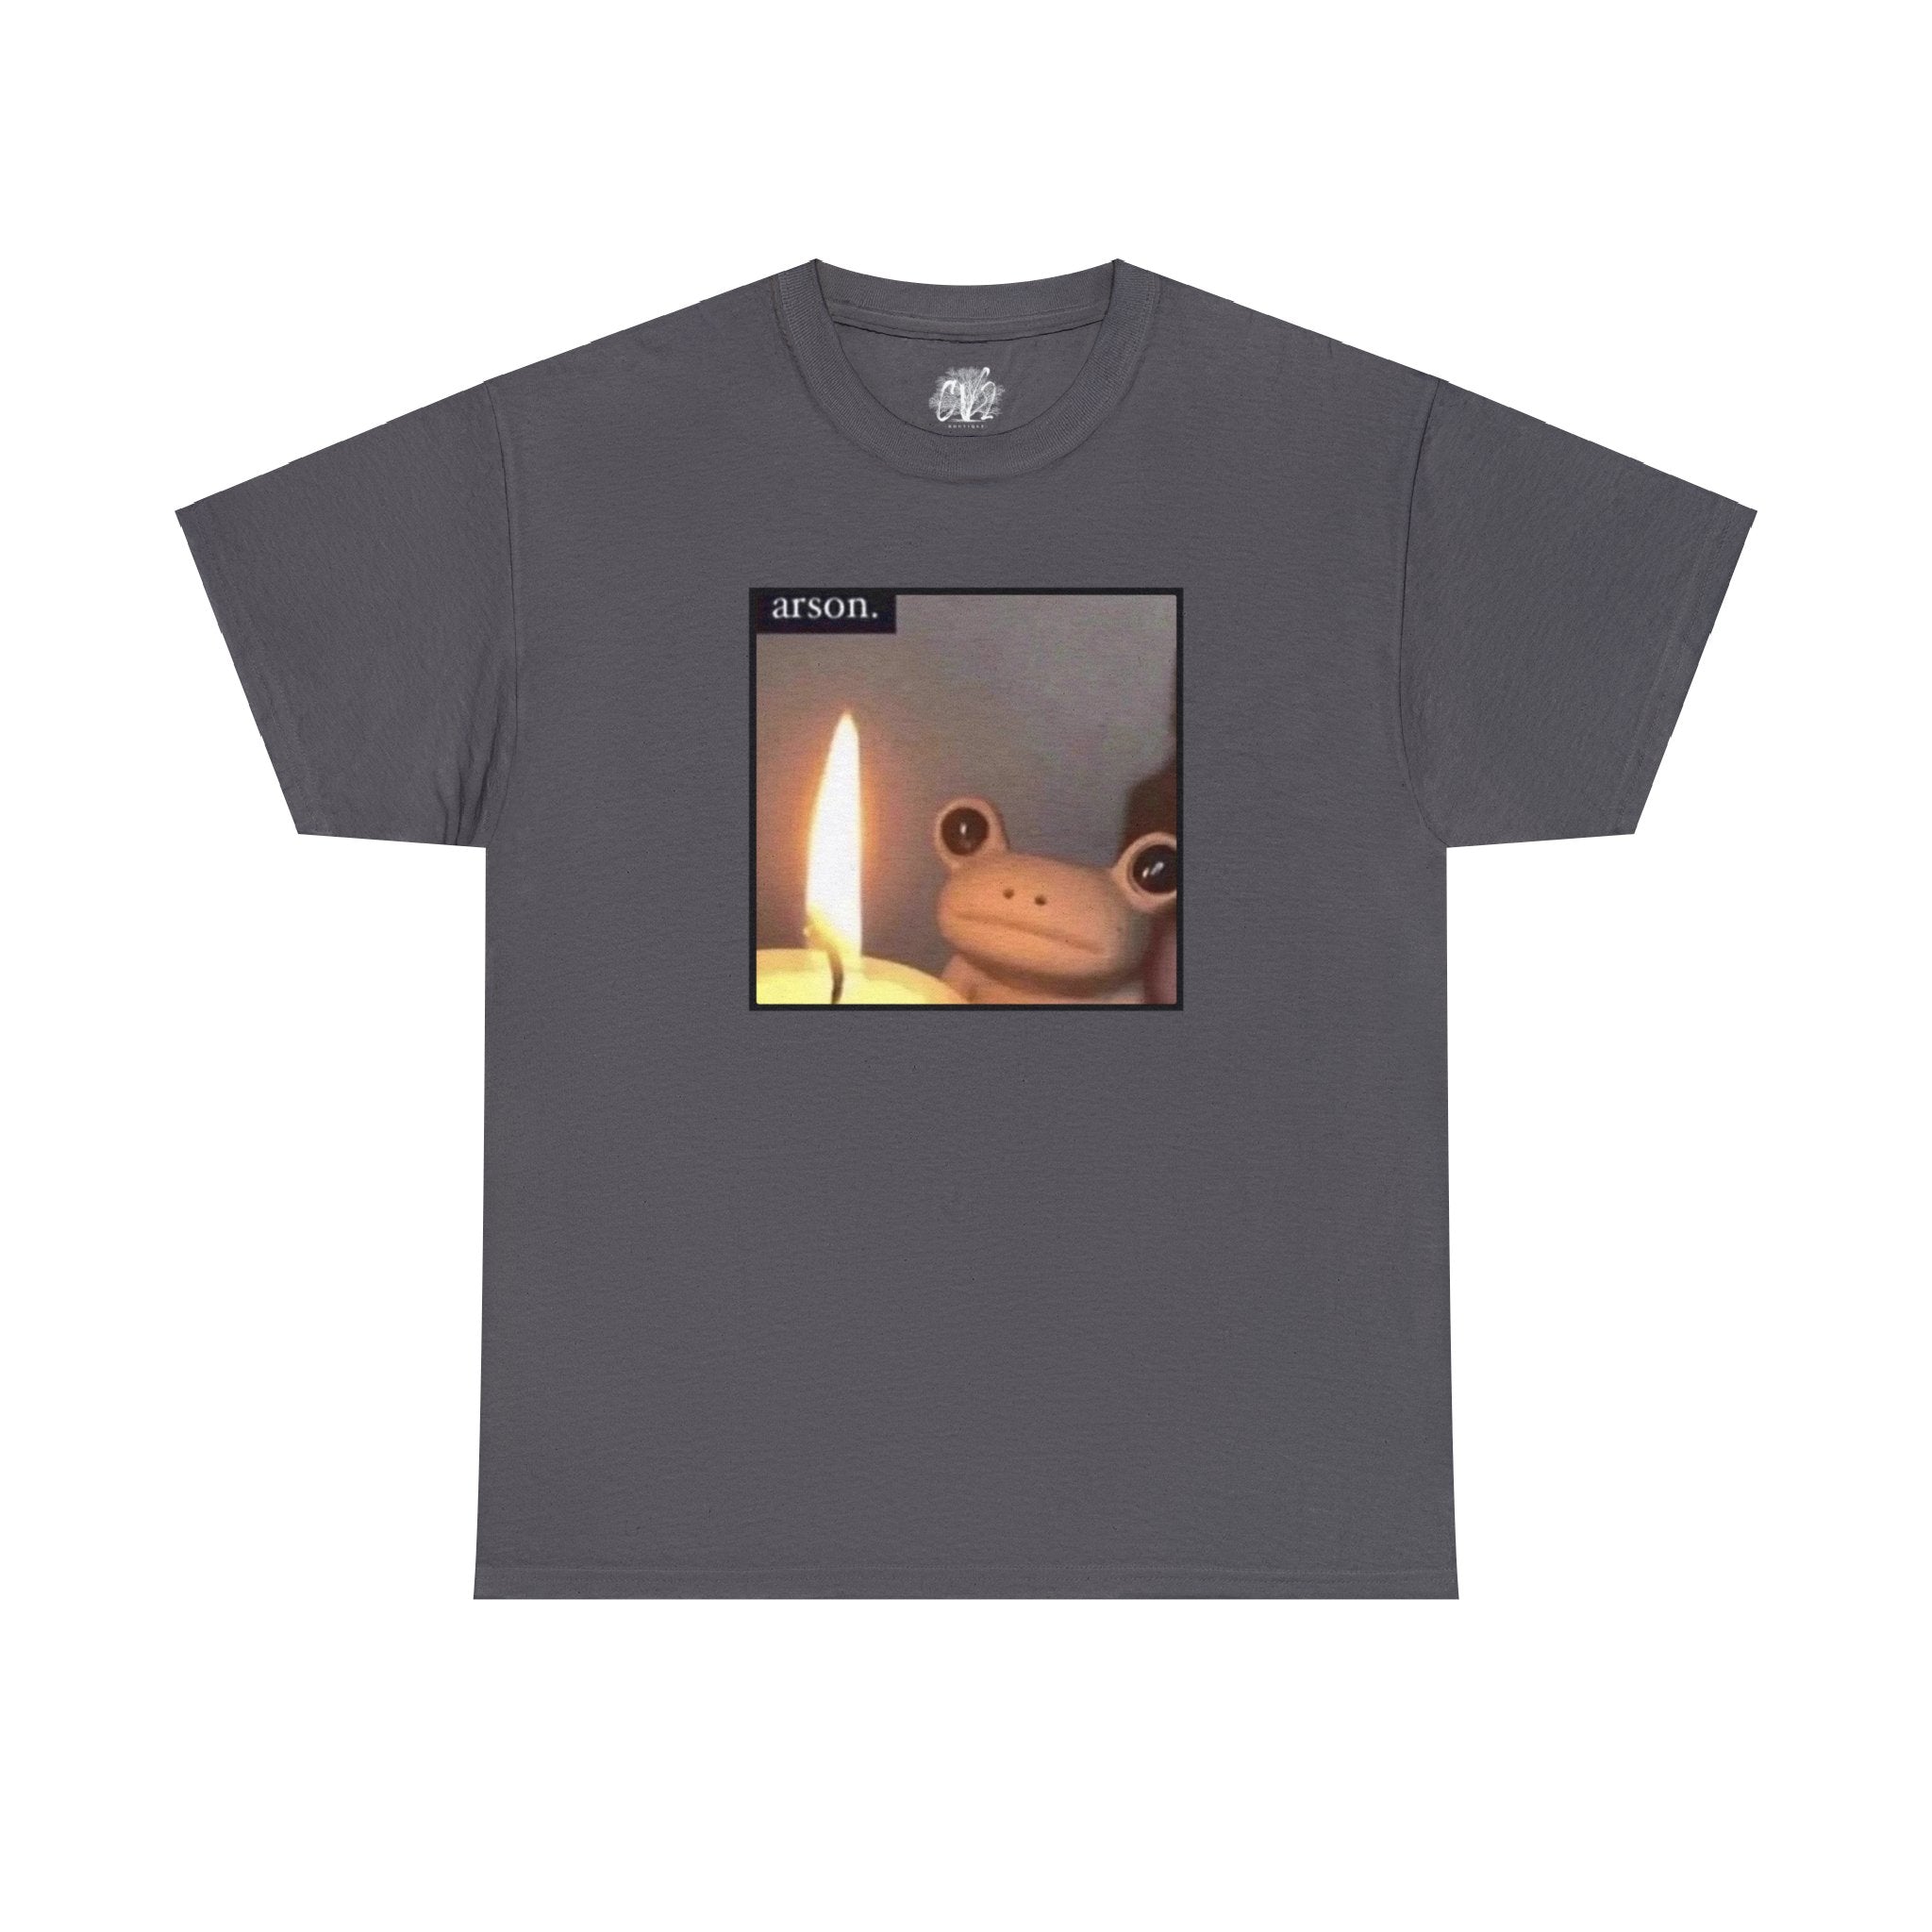 CV2 Arson Evil Sad Frog Meme Unisex Classic T-Shirt